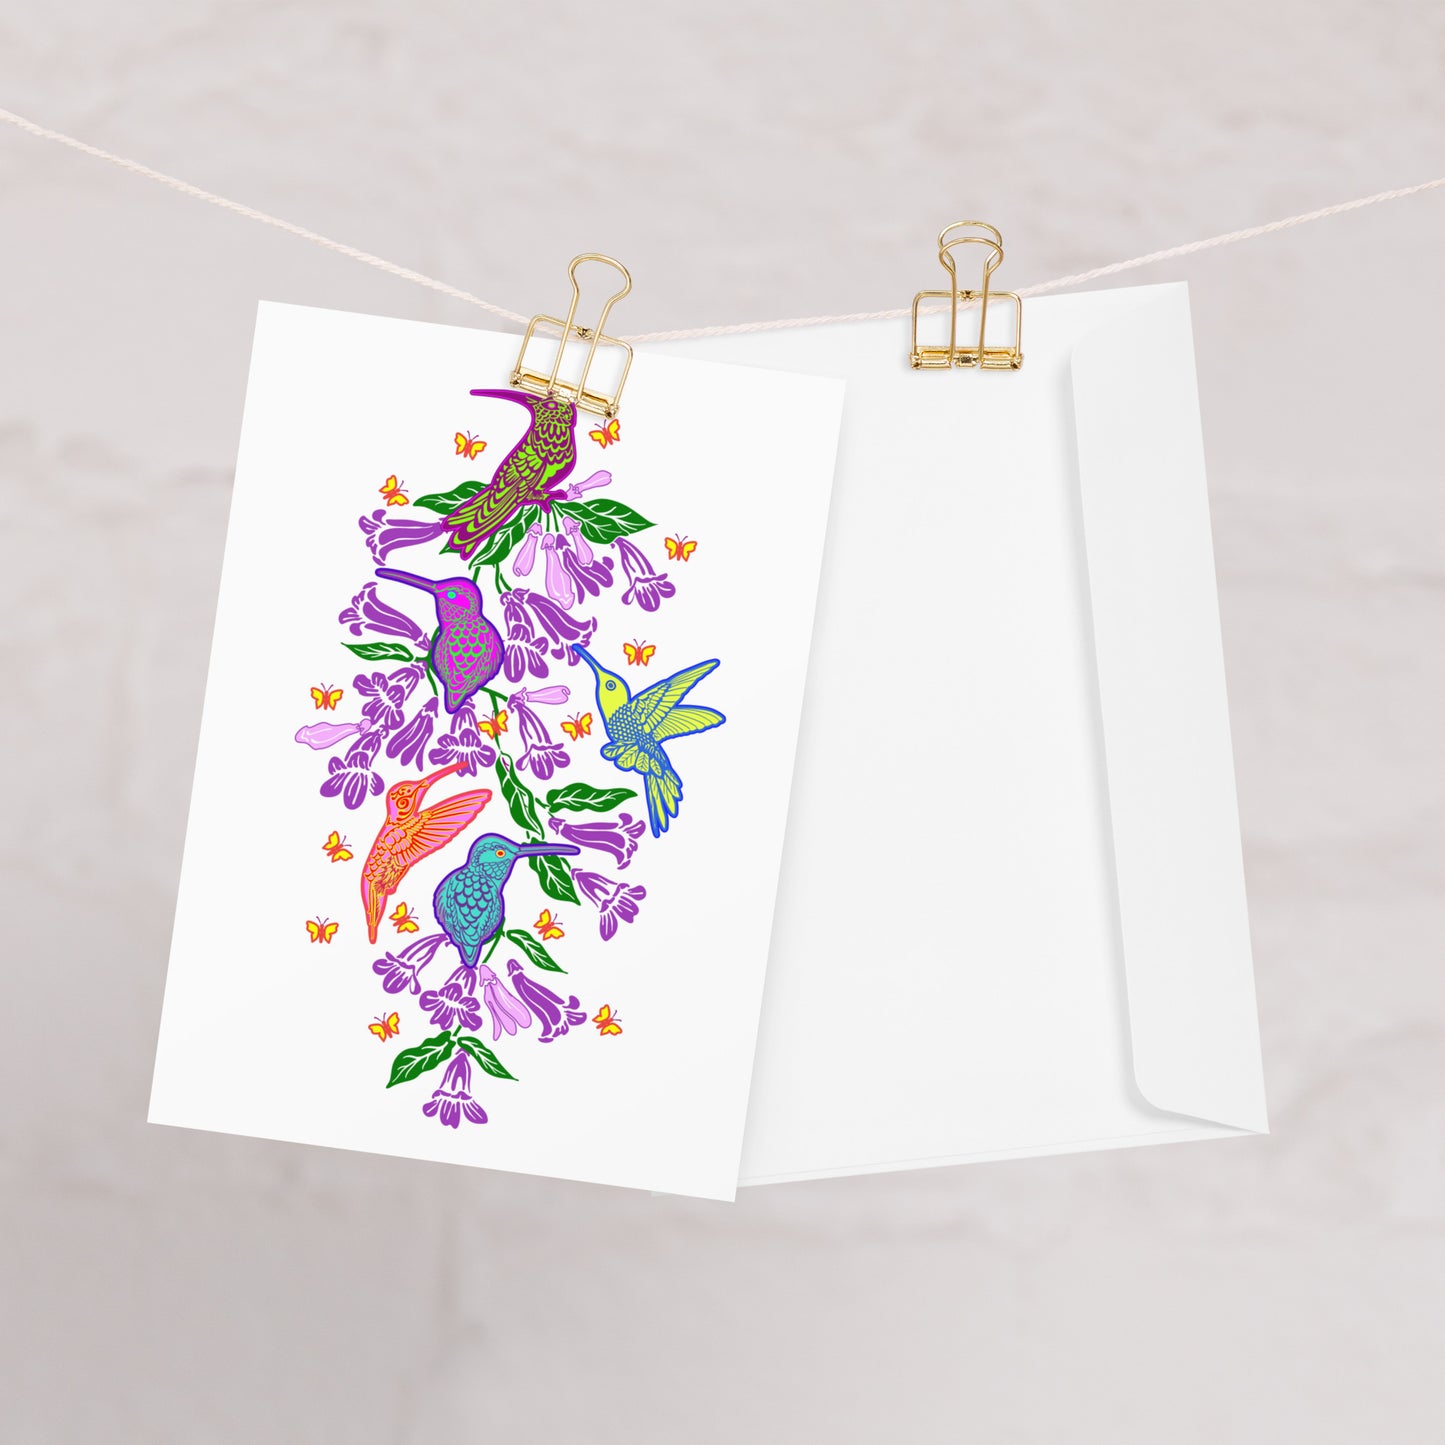 Hummingbirds by WPV- Greeting Card